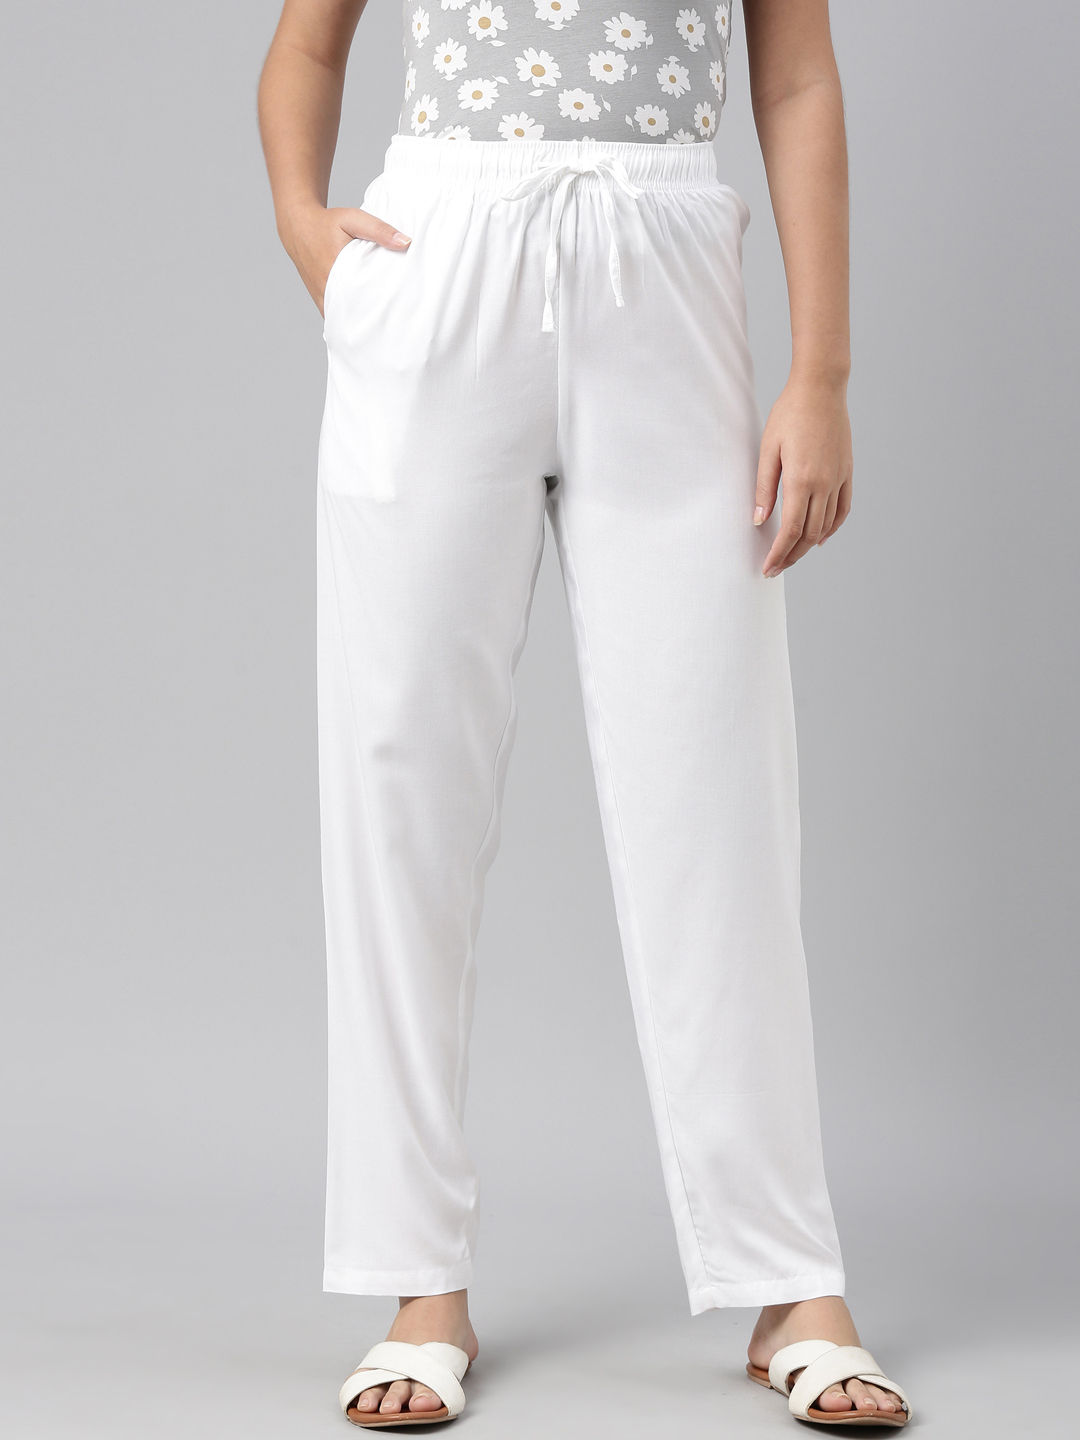 Byford Men Casual Full Length White Trouser - Selling Fast at Pantaloons.com